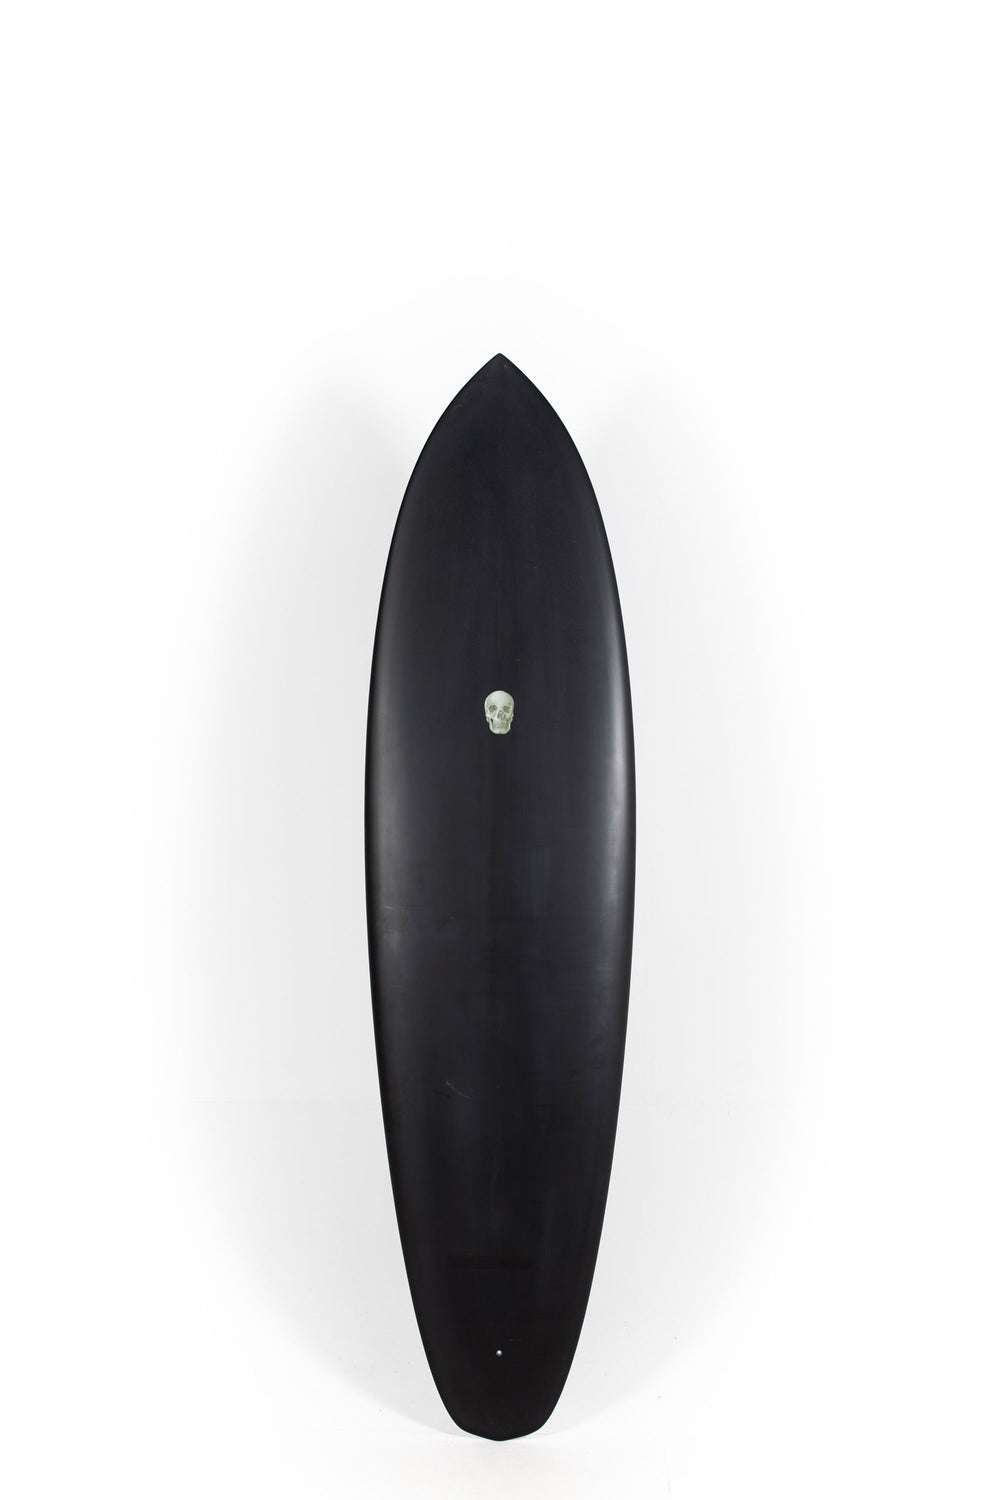 Pukas Surf Shop - Christenson Surfboards - ULTRA TRACKER - 7'0